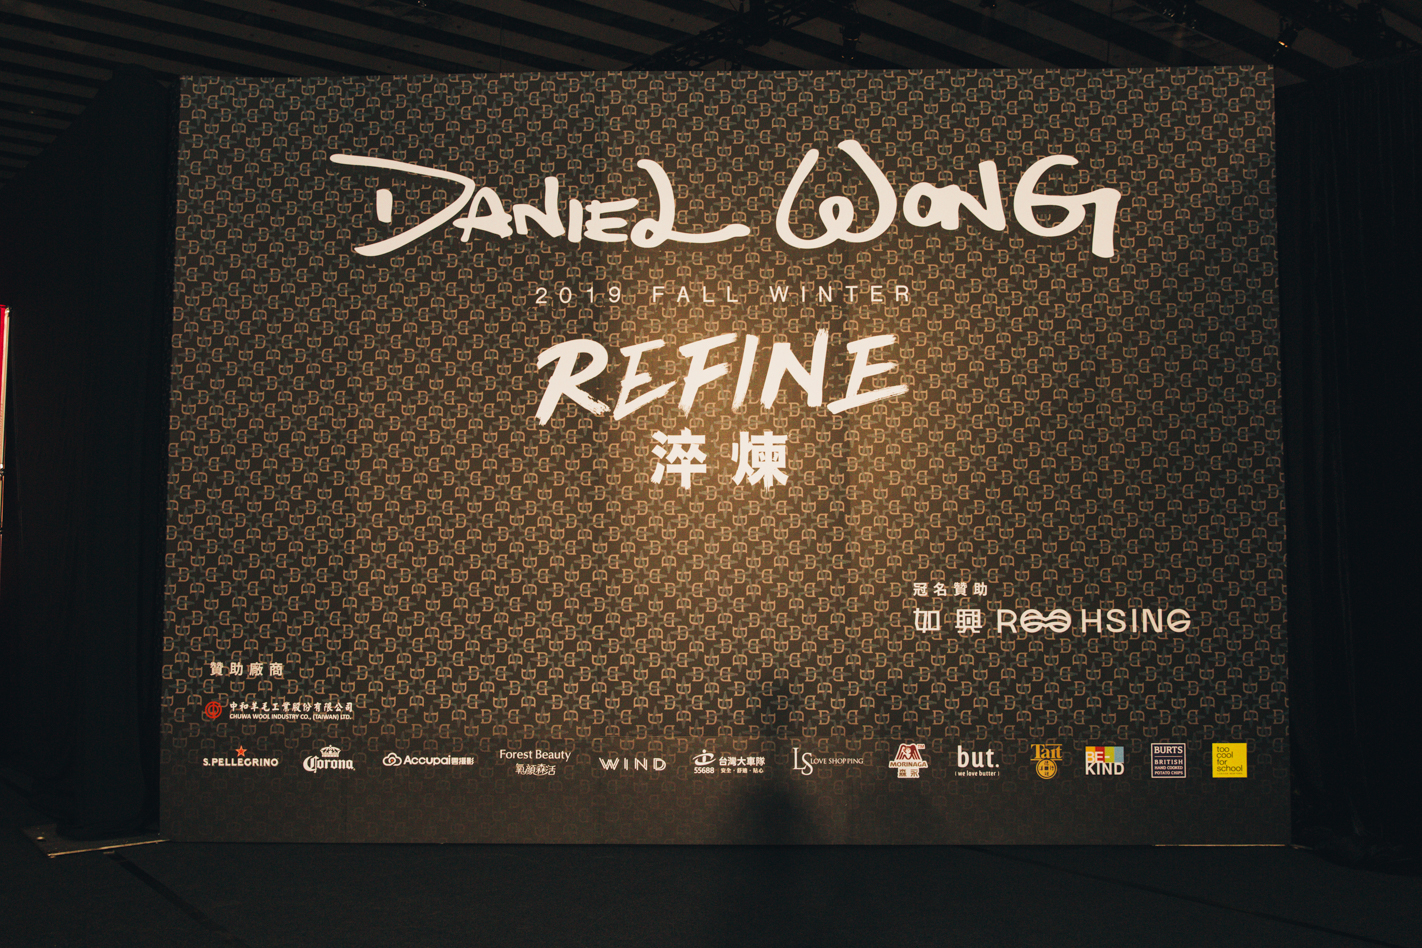 Roo Hsing as title sponsor of "Daniel Wong FW19 Fashion Show"